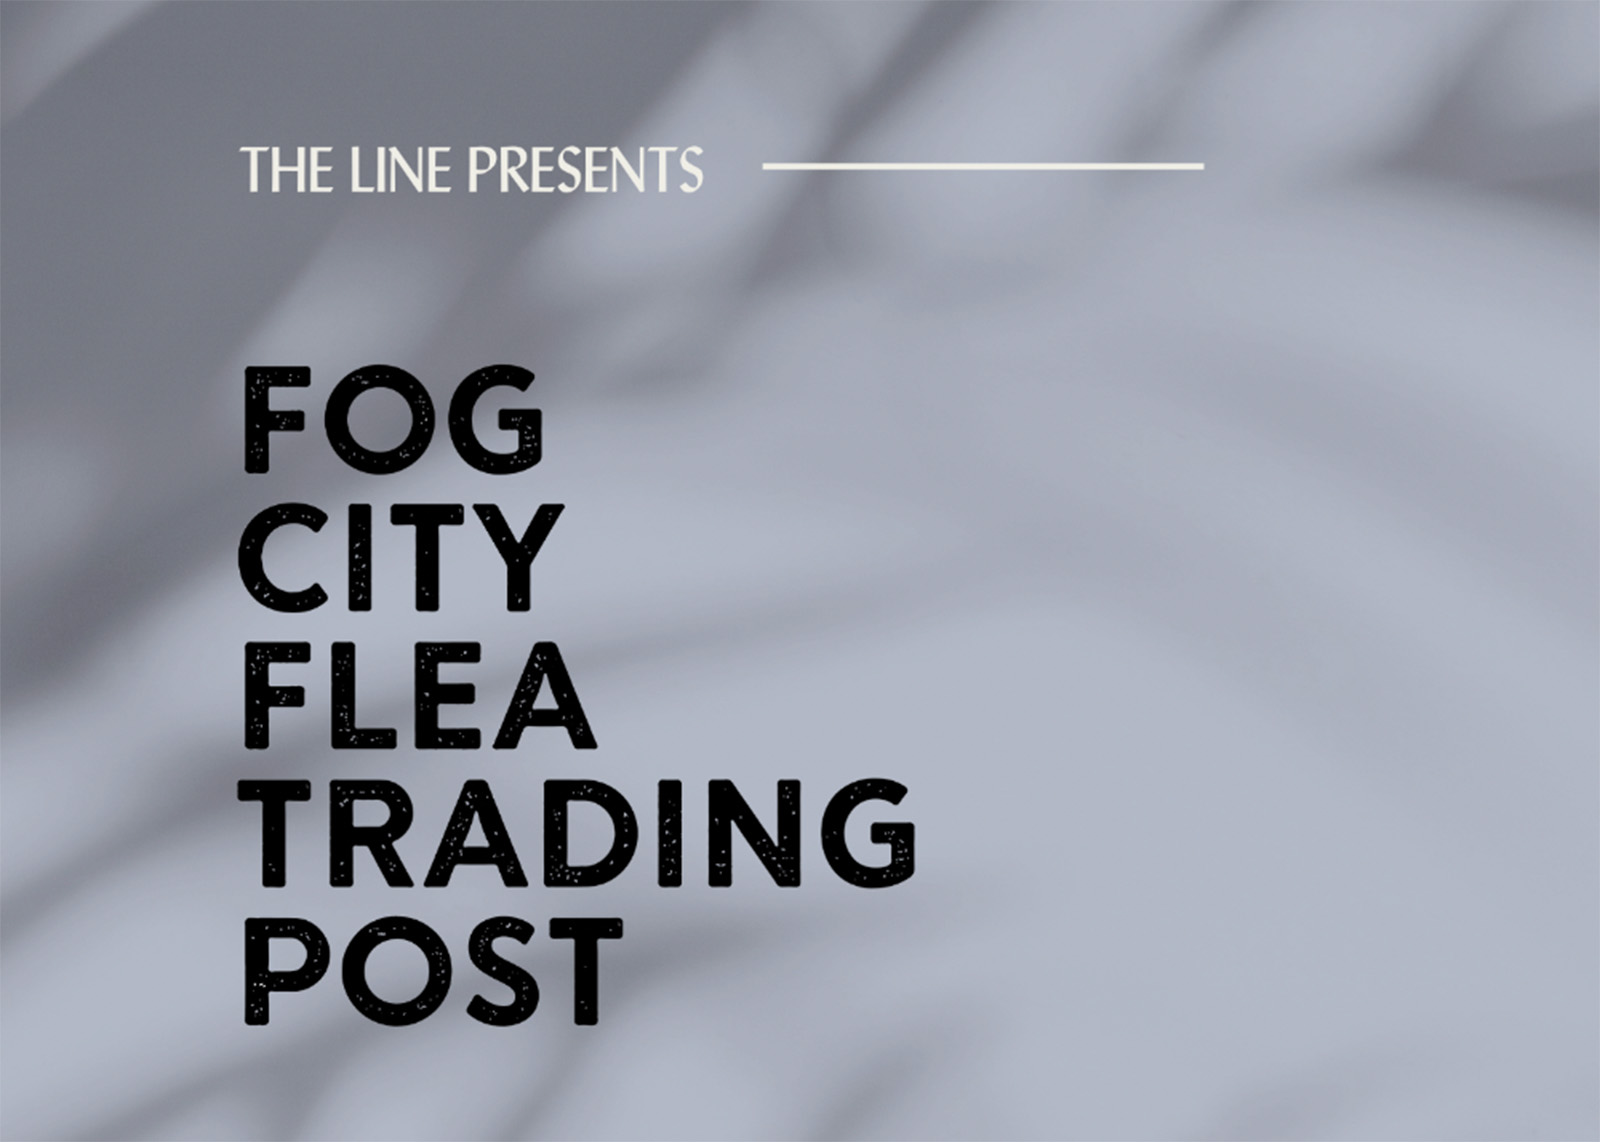 Fog City Flea Trading Post